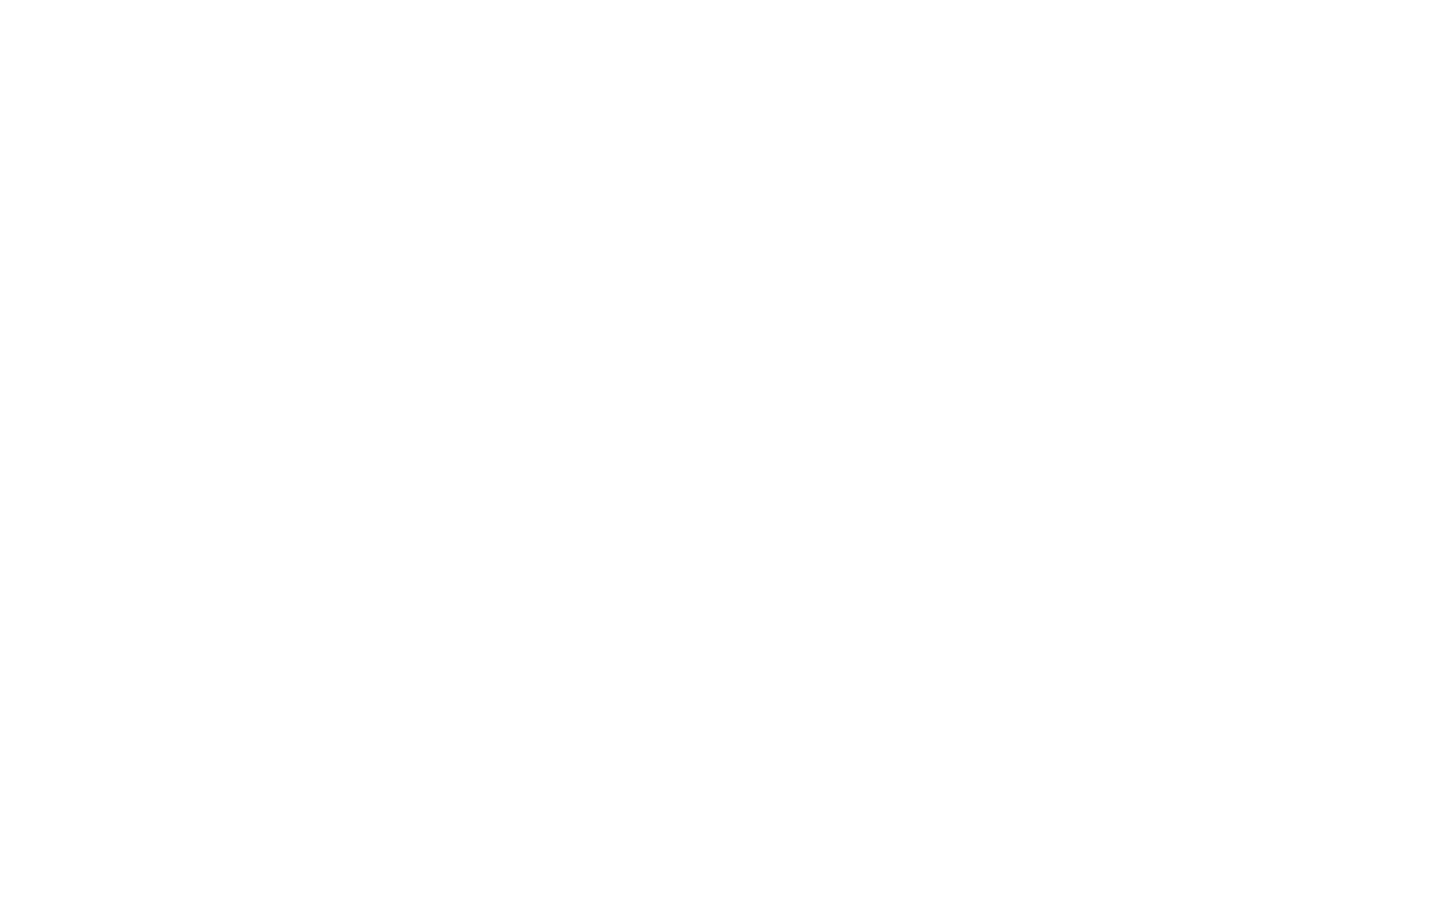 Lawn fertilization weed control list of services